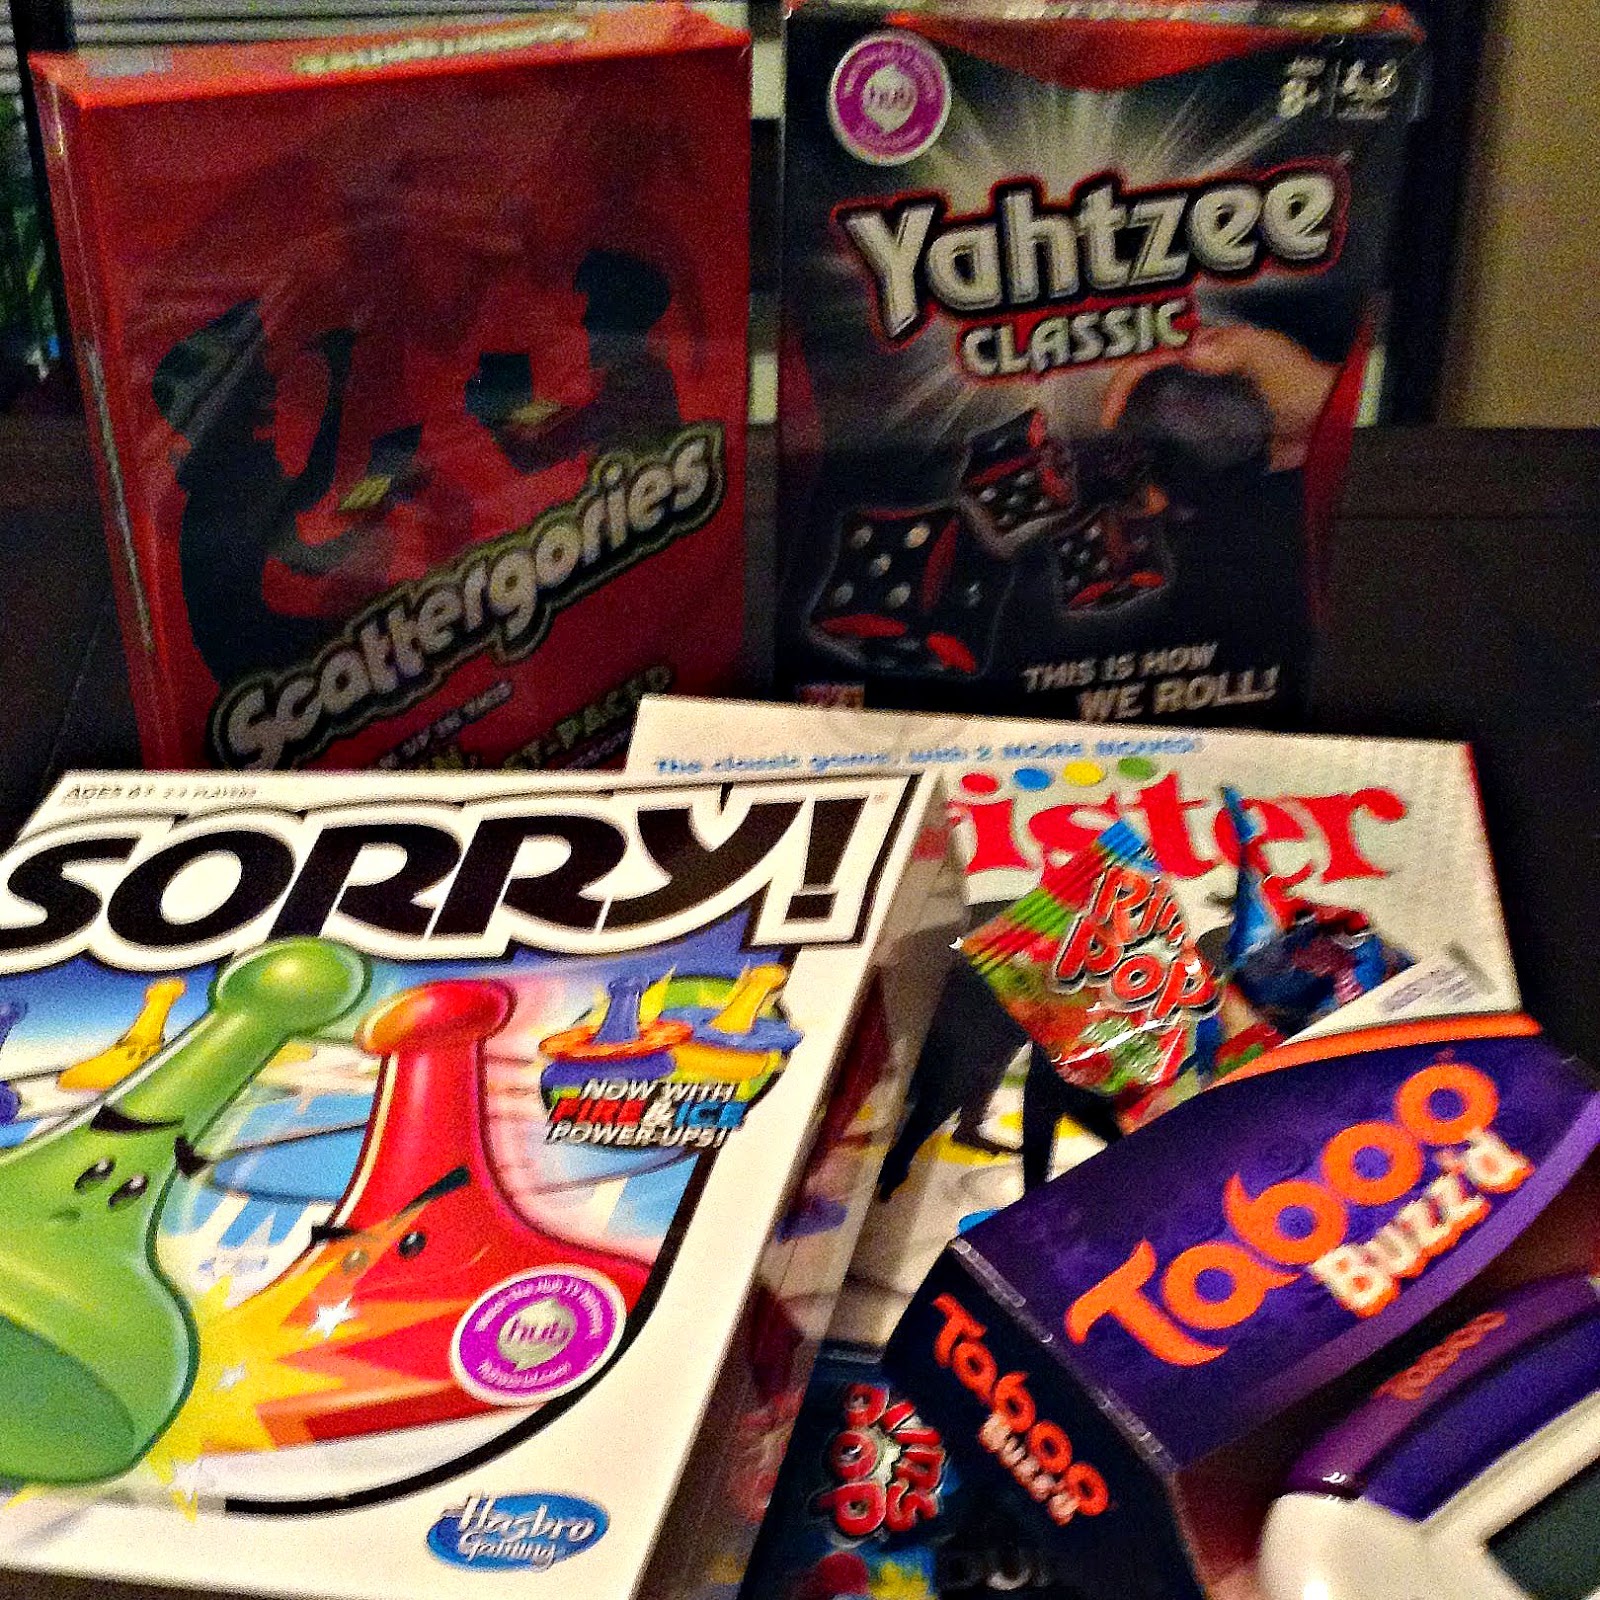 Hasbro Games - Scattergories, Yahtzee, Sorry!, Taboo Buzzd, Twister